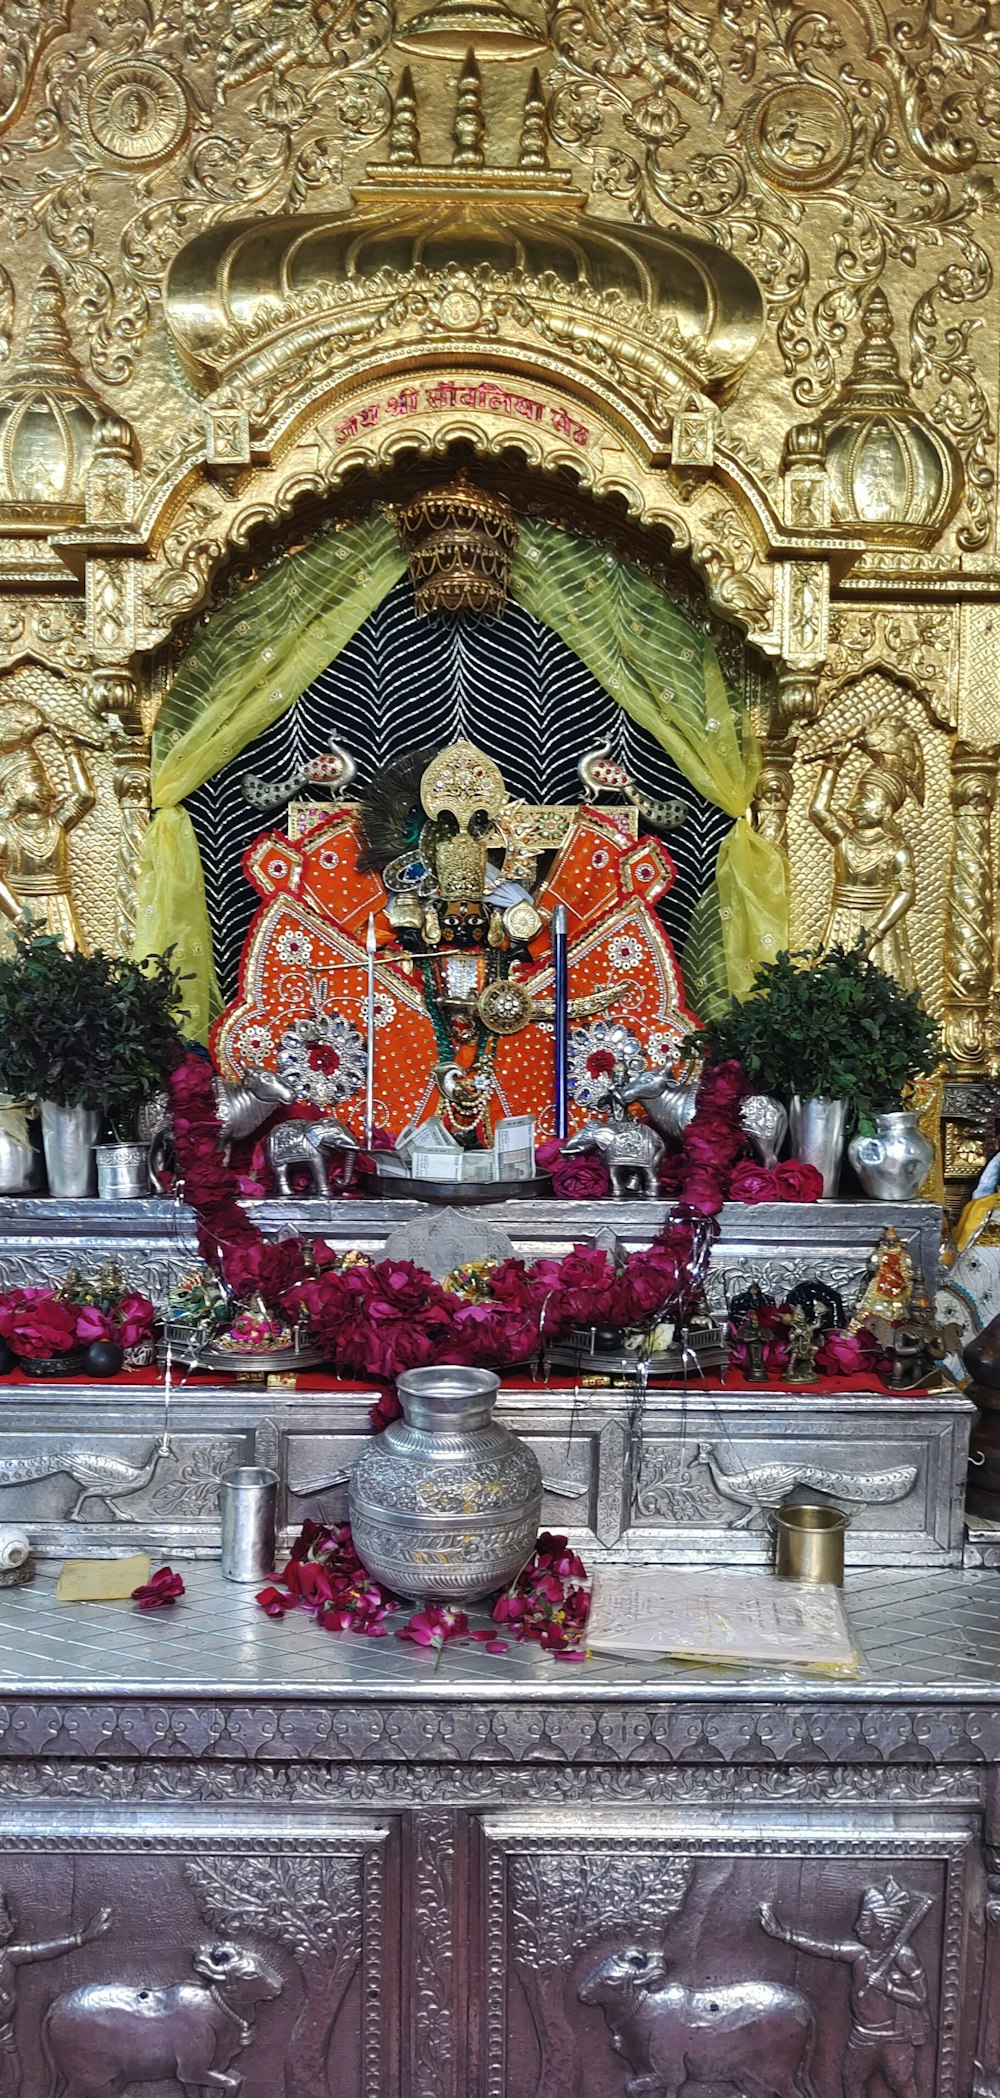 a shrine with a statue of a hindu god